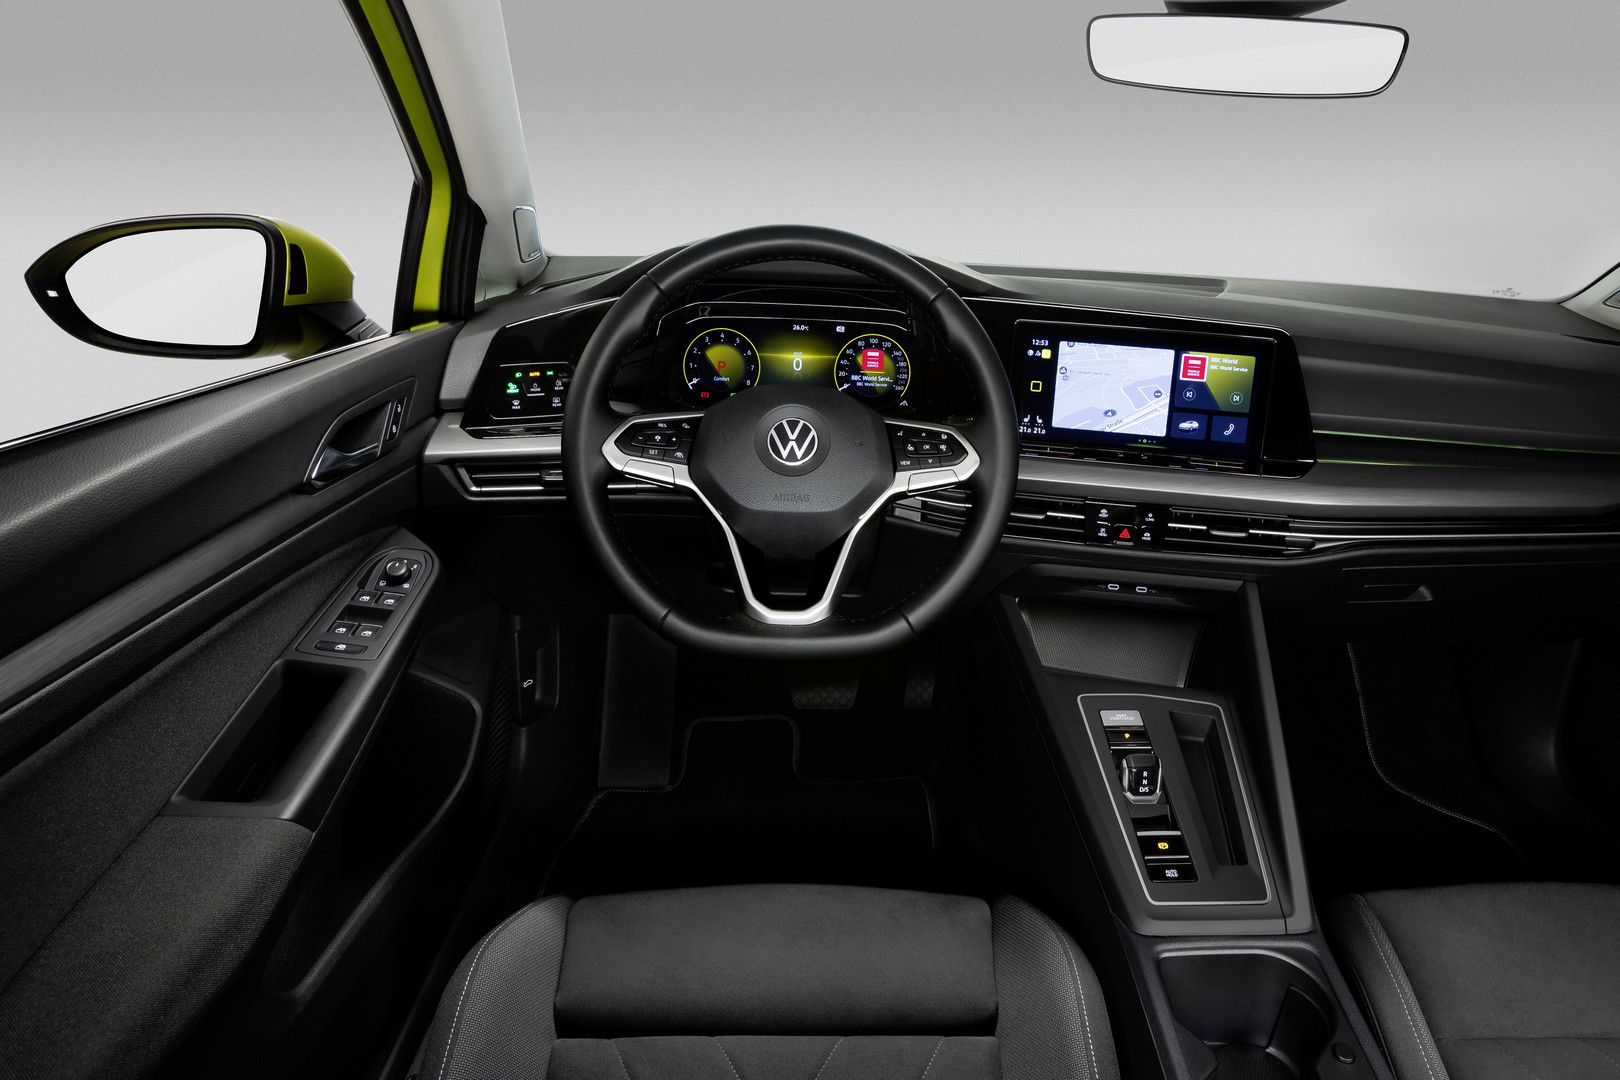 2020 Volkswagen Golf 8 Officially Revealed! GTspirit